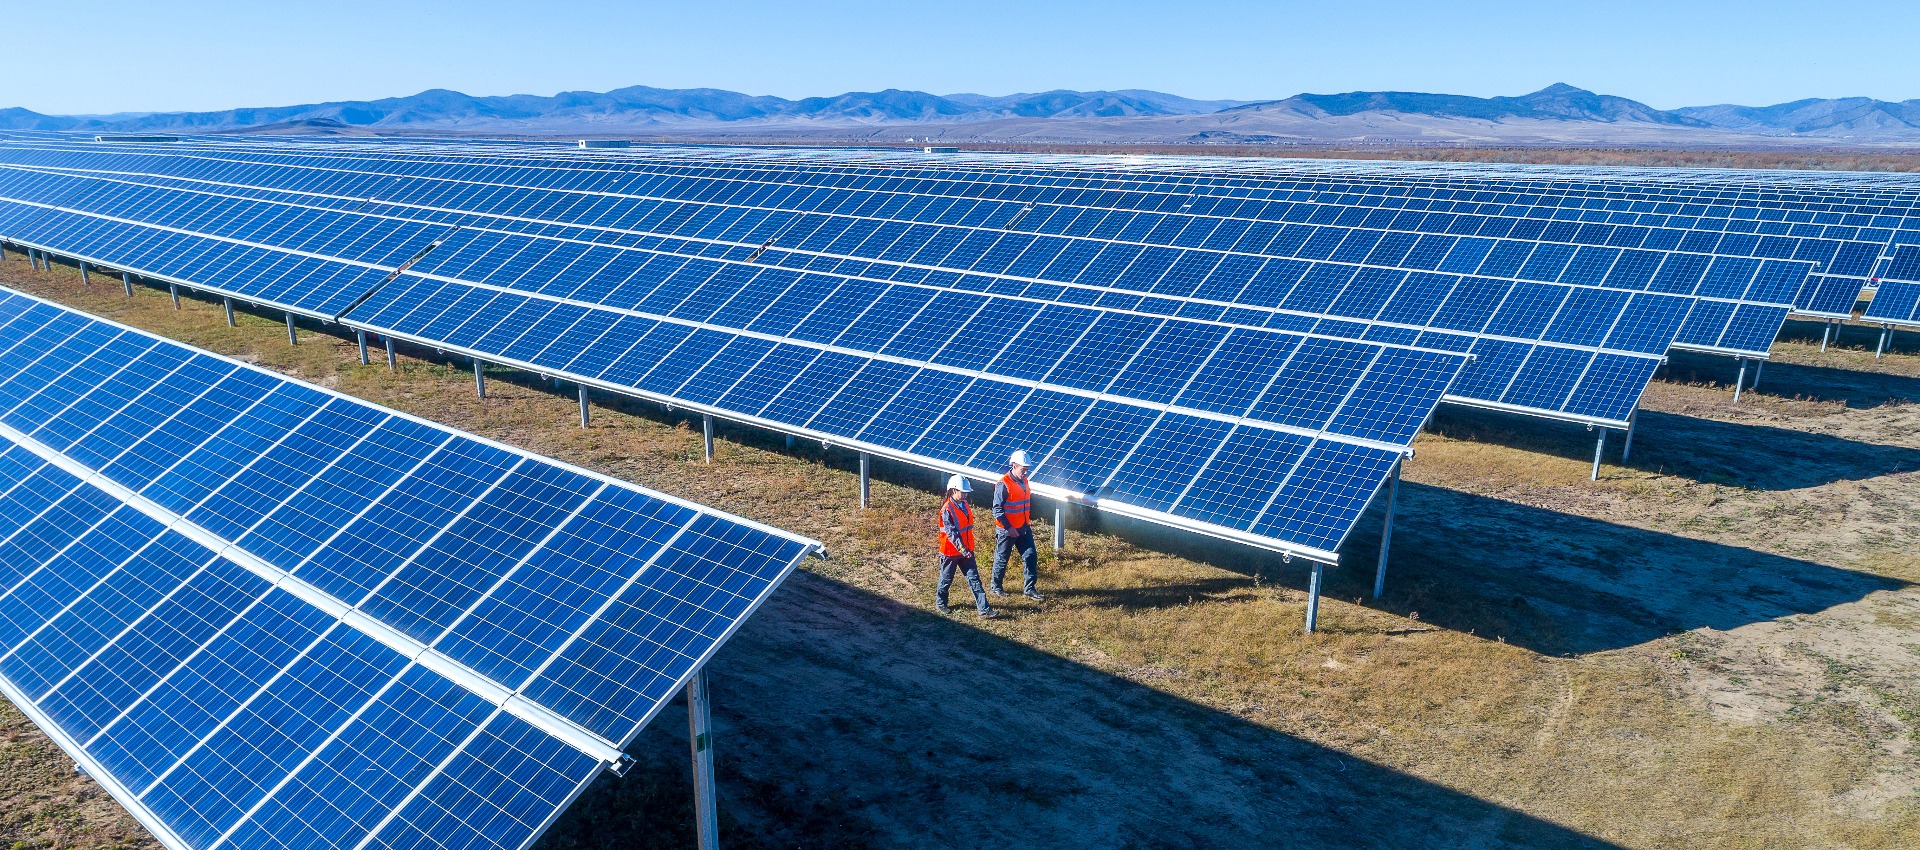 solar panels - renewable energy